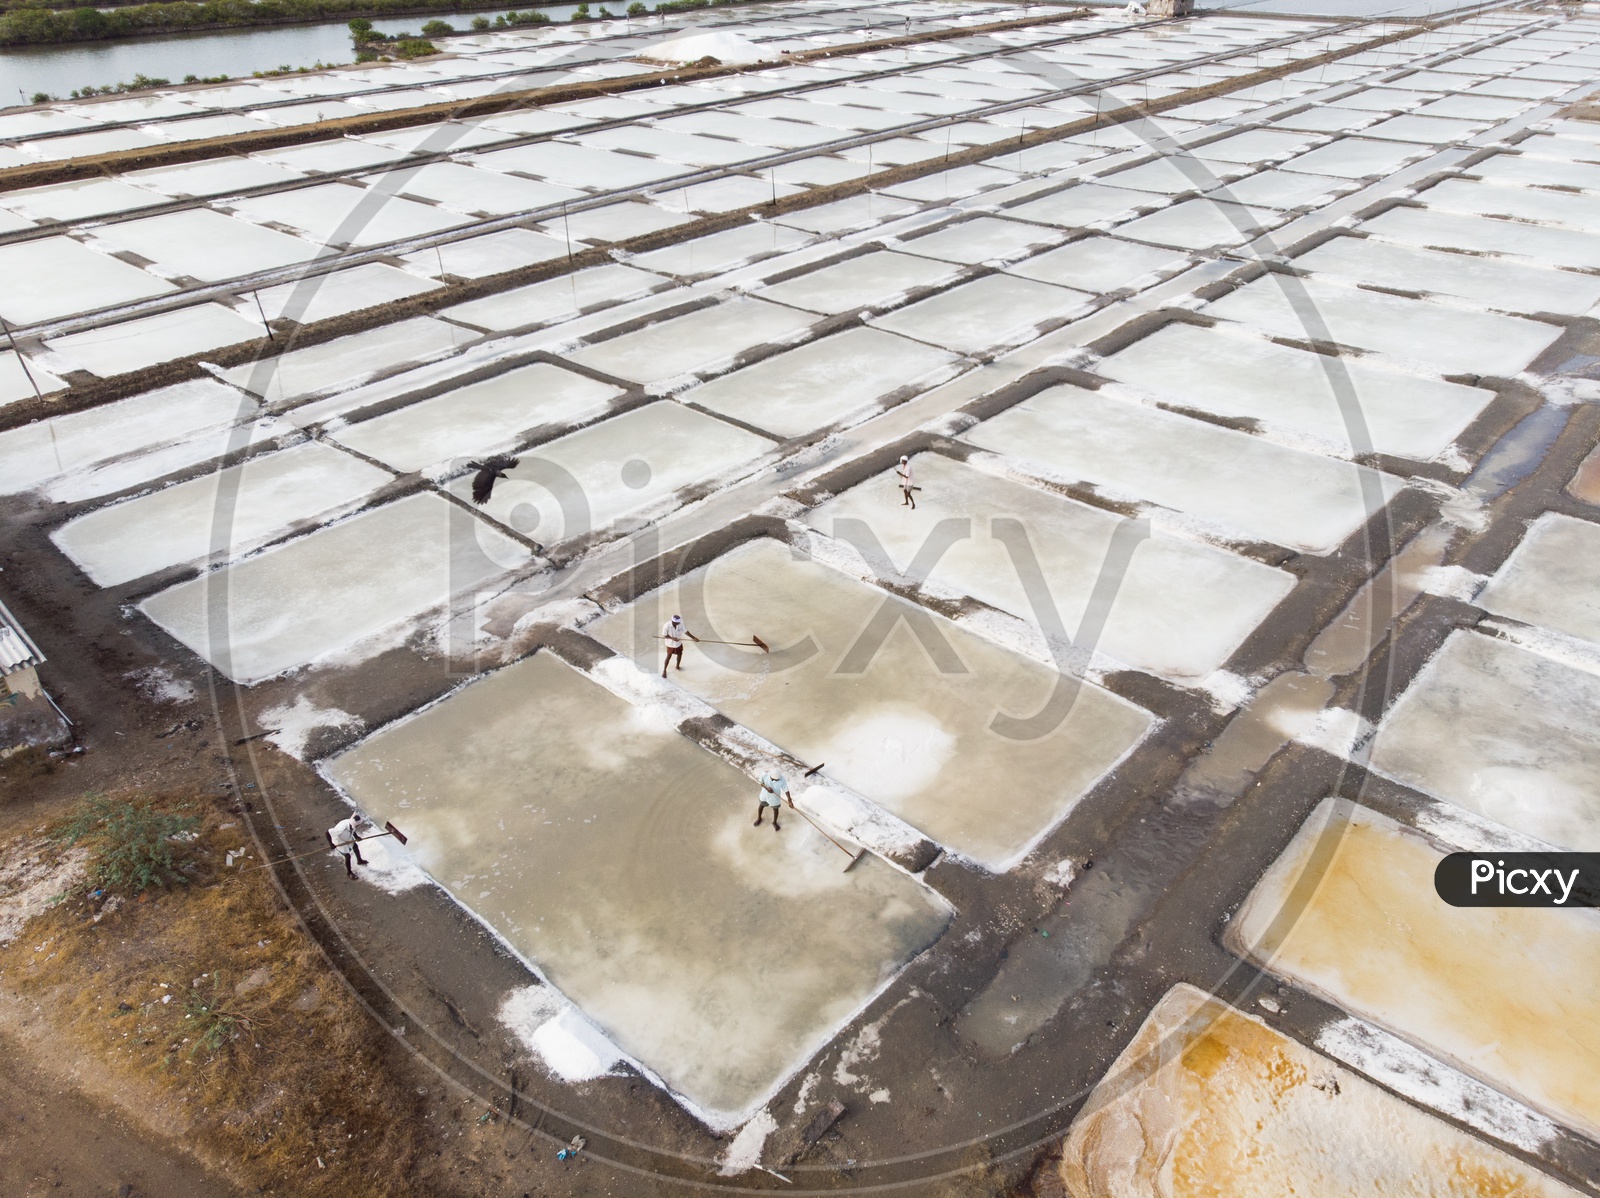 Aerial View Of Salt Making or Harvesting Beds or Pans